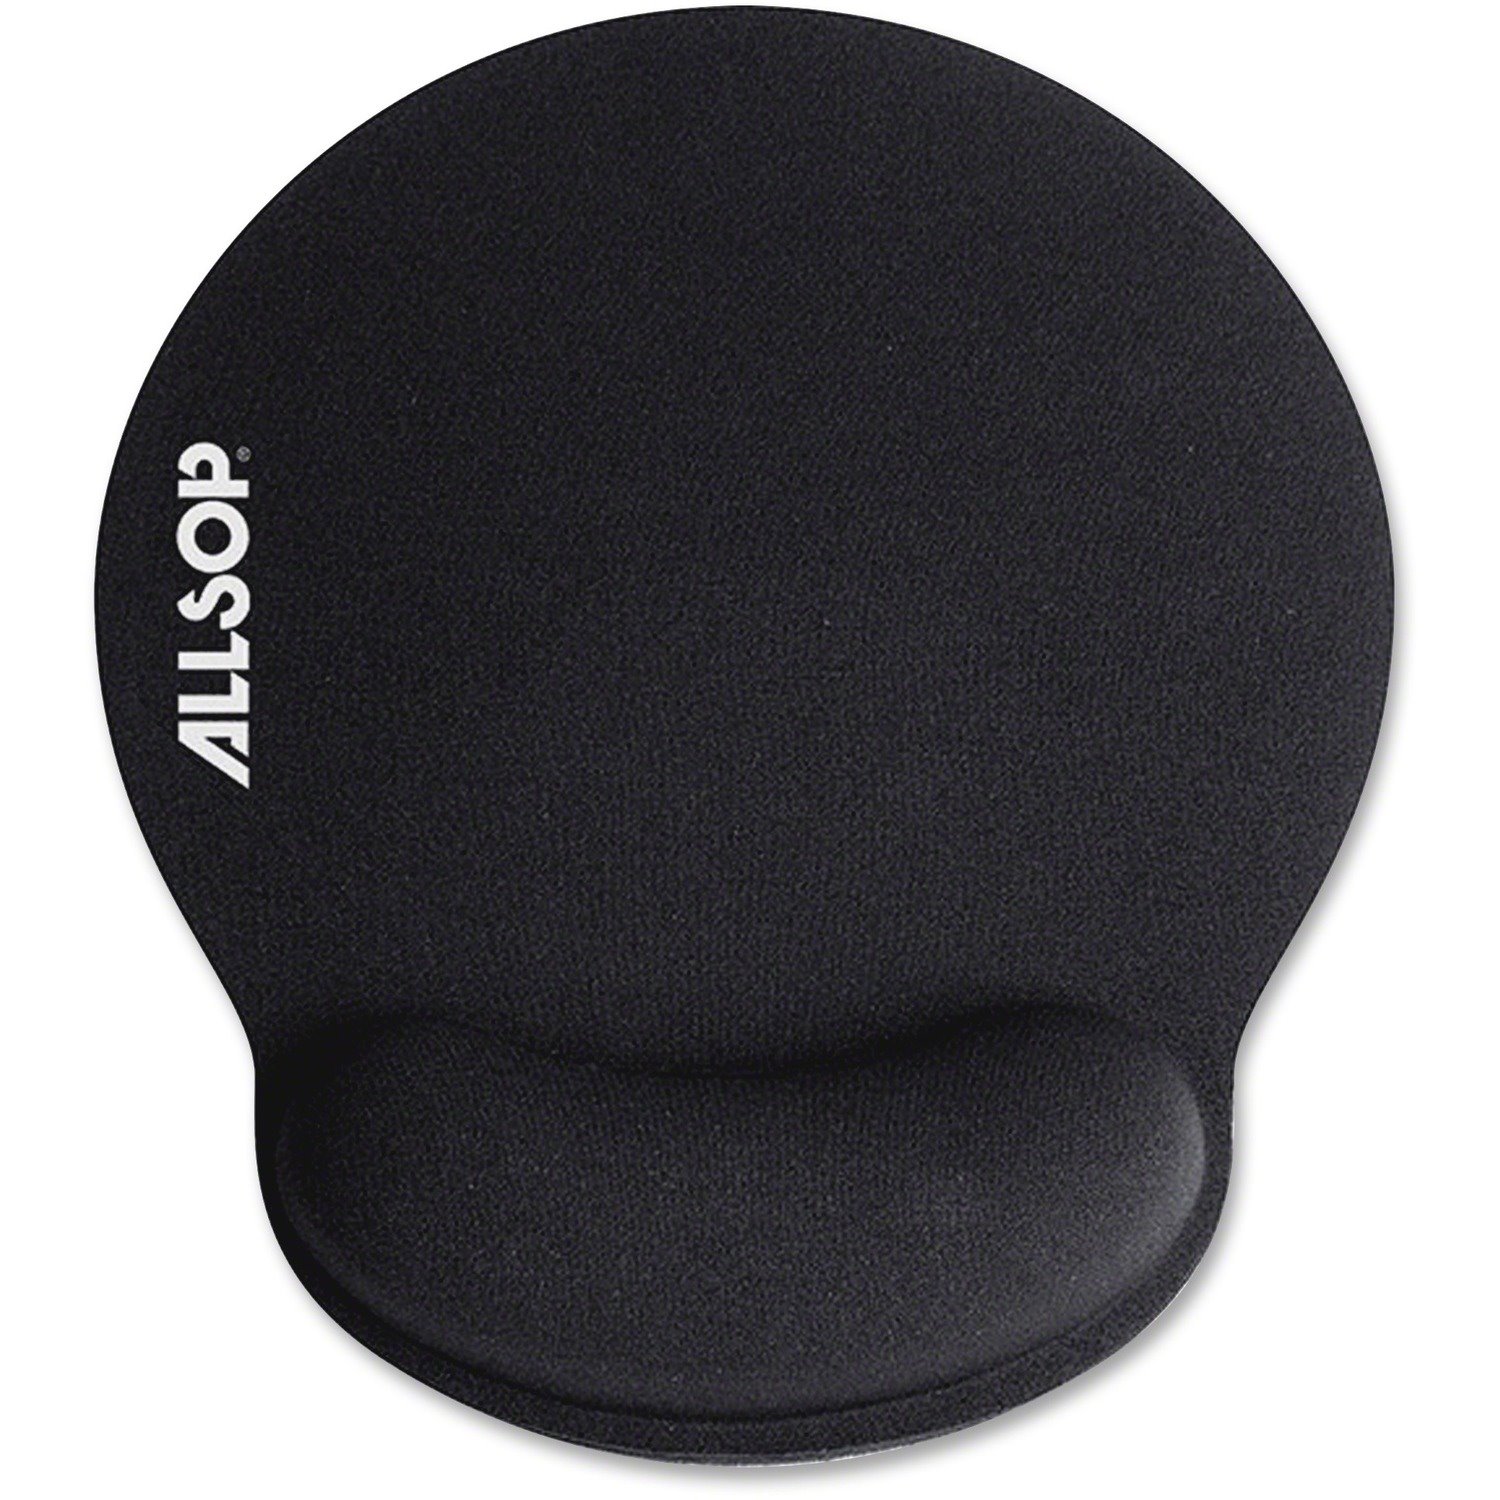 Allsop ComfortFoam Memory Foam Mouse Pad with Wrist Rest